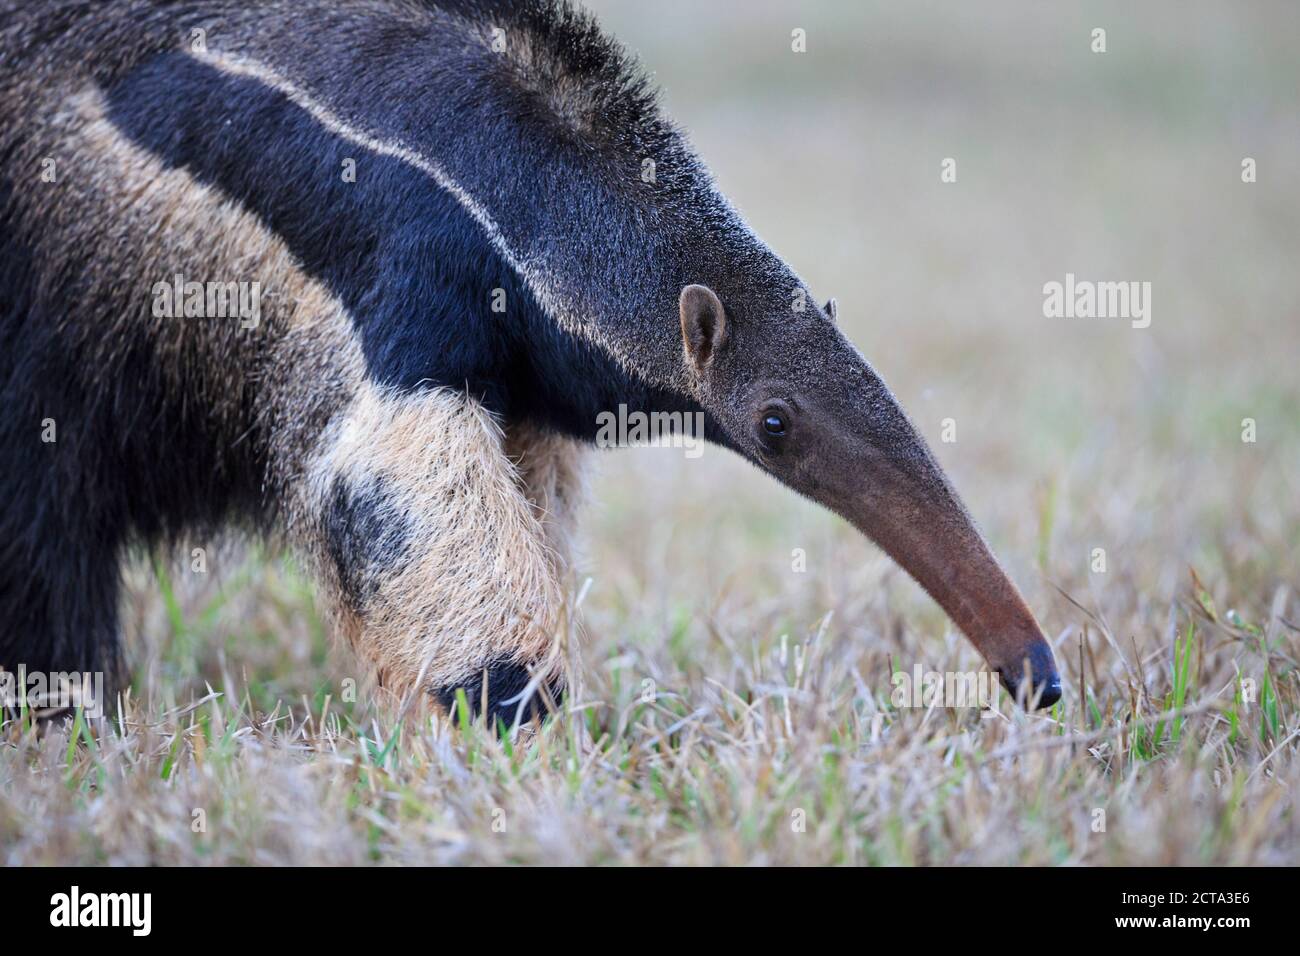 Brazil, Mato Grosso, Mato Grosso do Sul, Pantanal, giant anteater Stock Photo